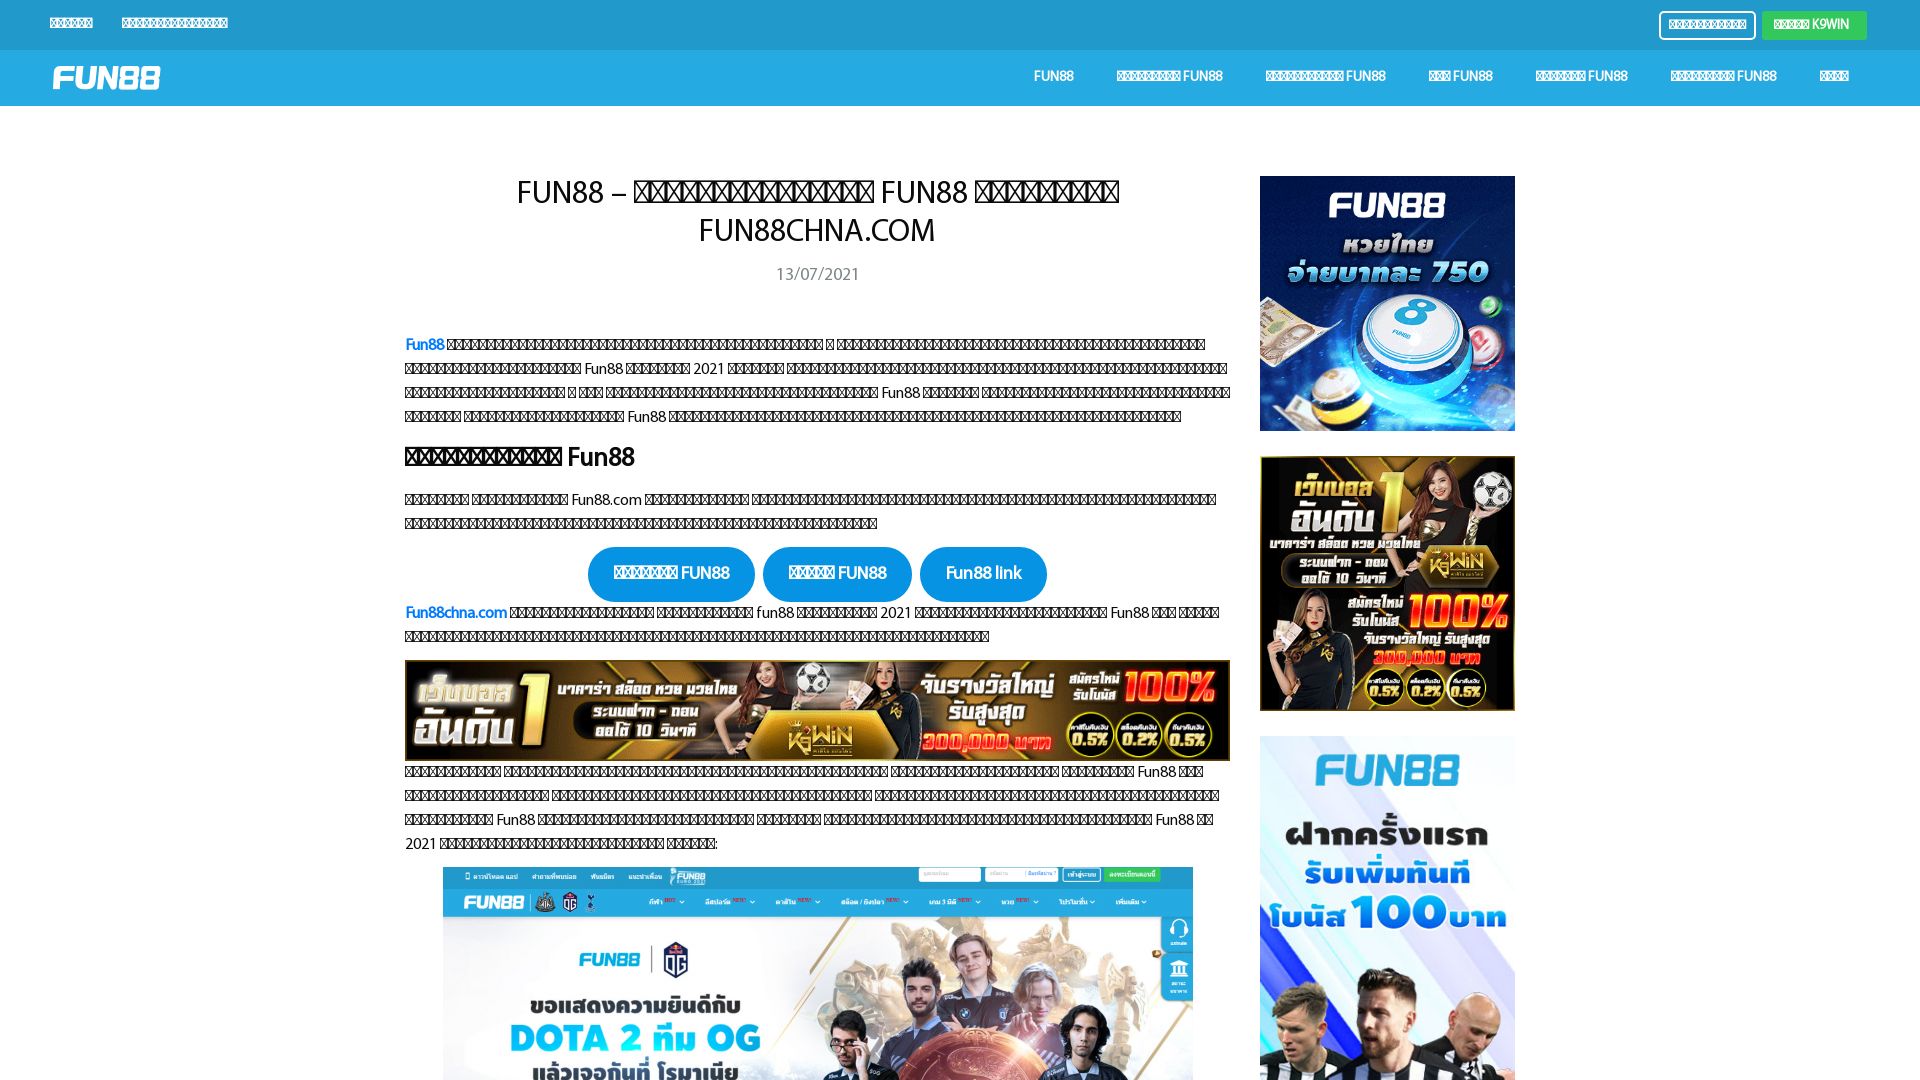 Webseitenstatus fun88chna.com ist   ONLINE